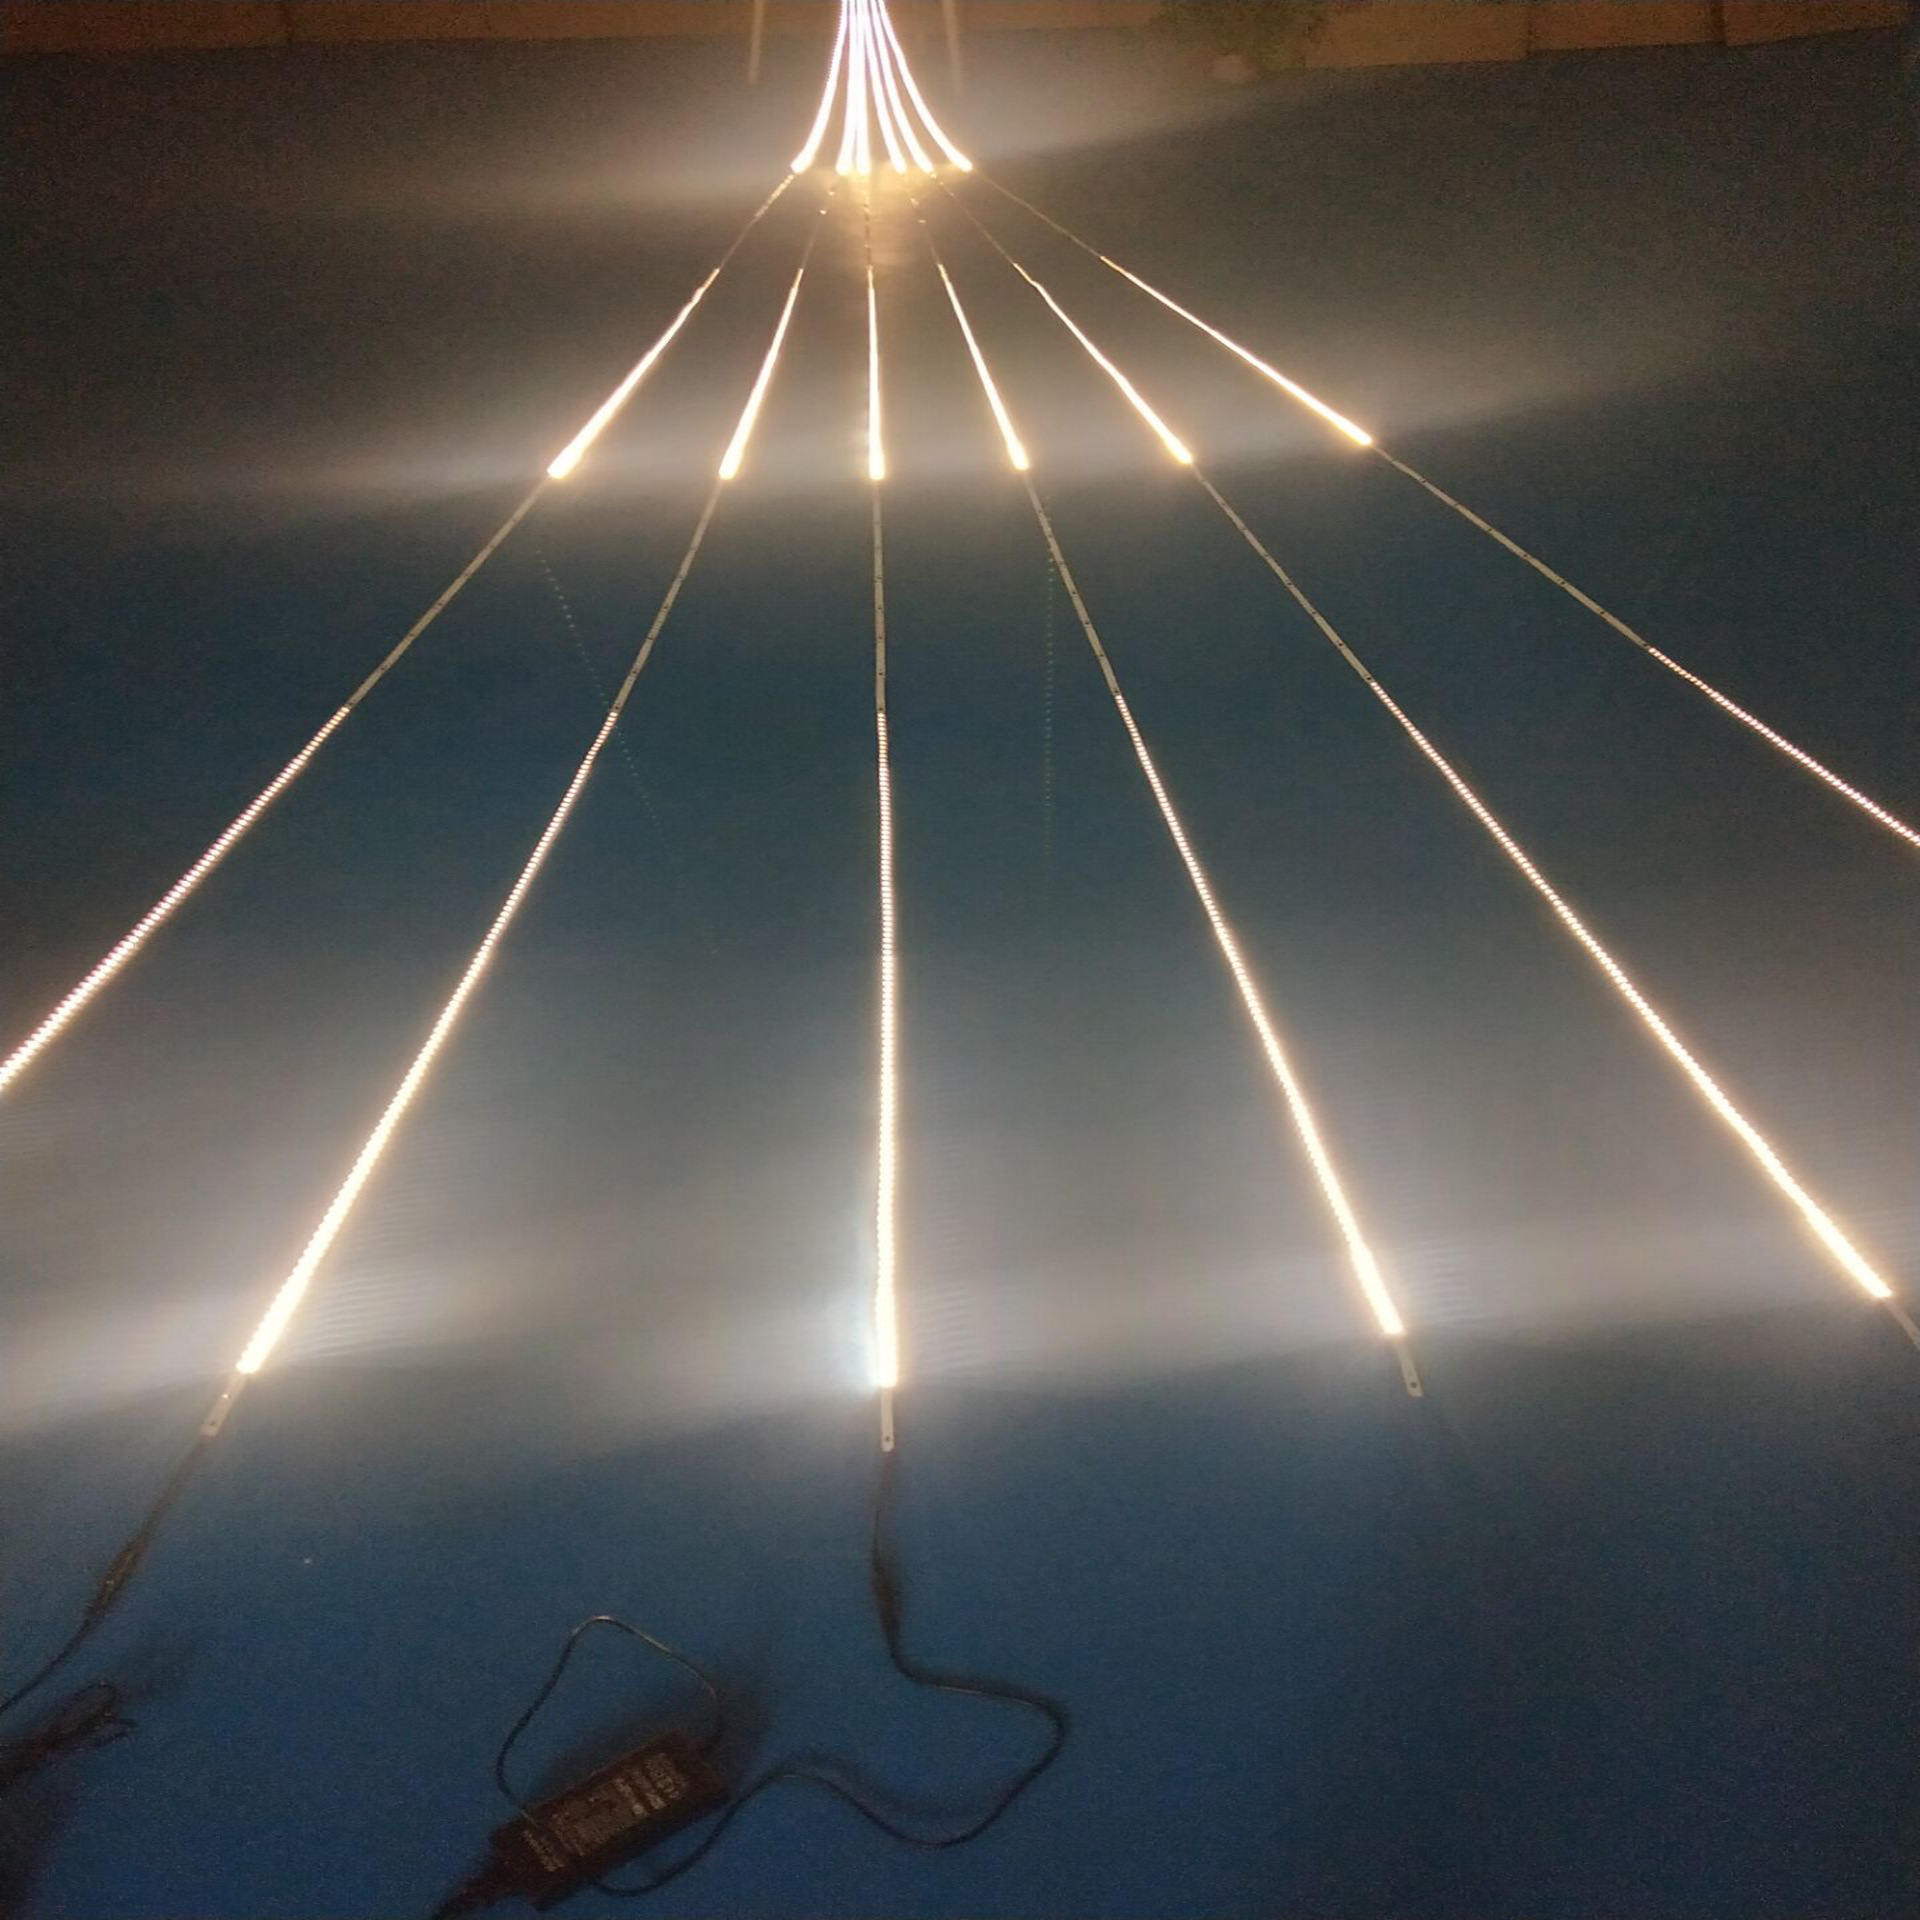 individual addressable LED strip light